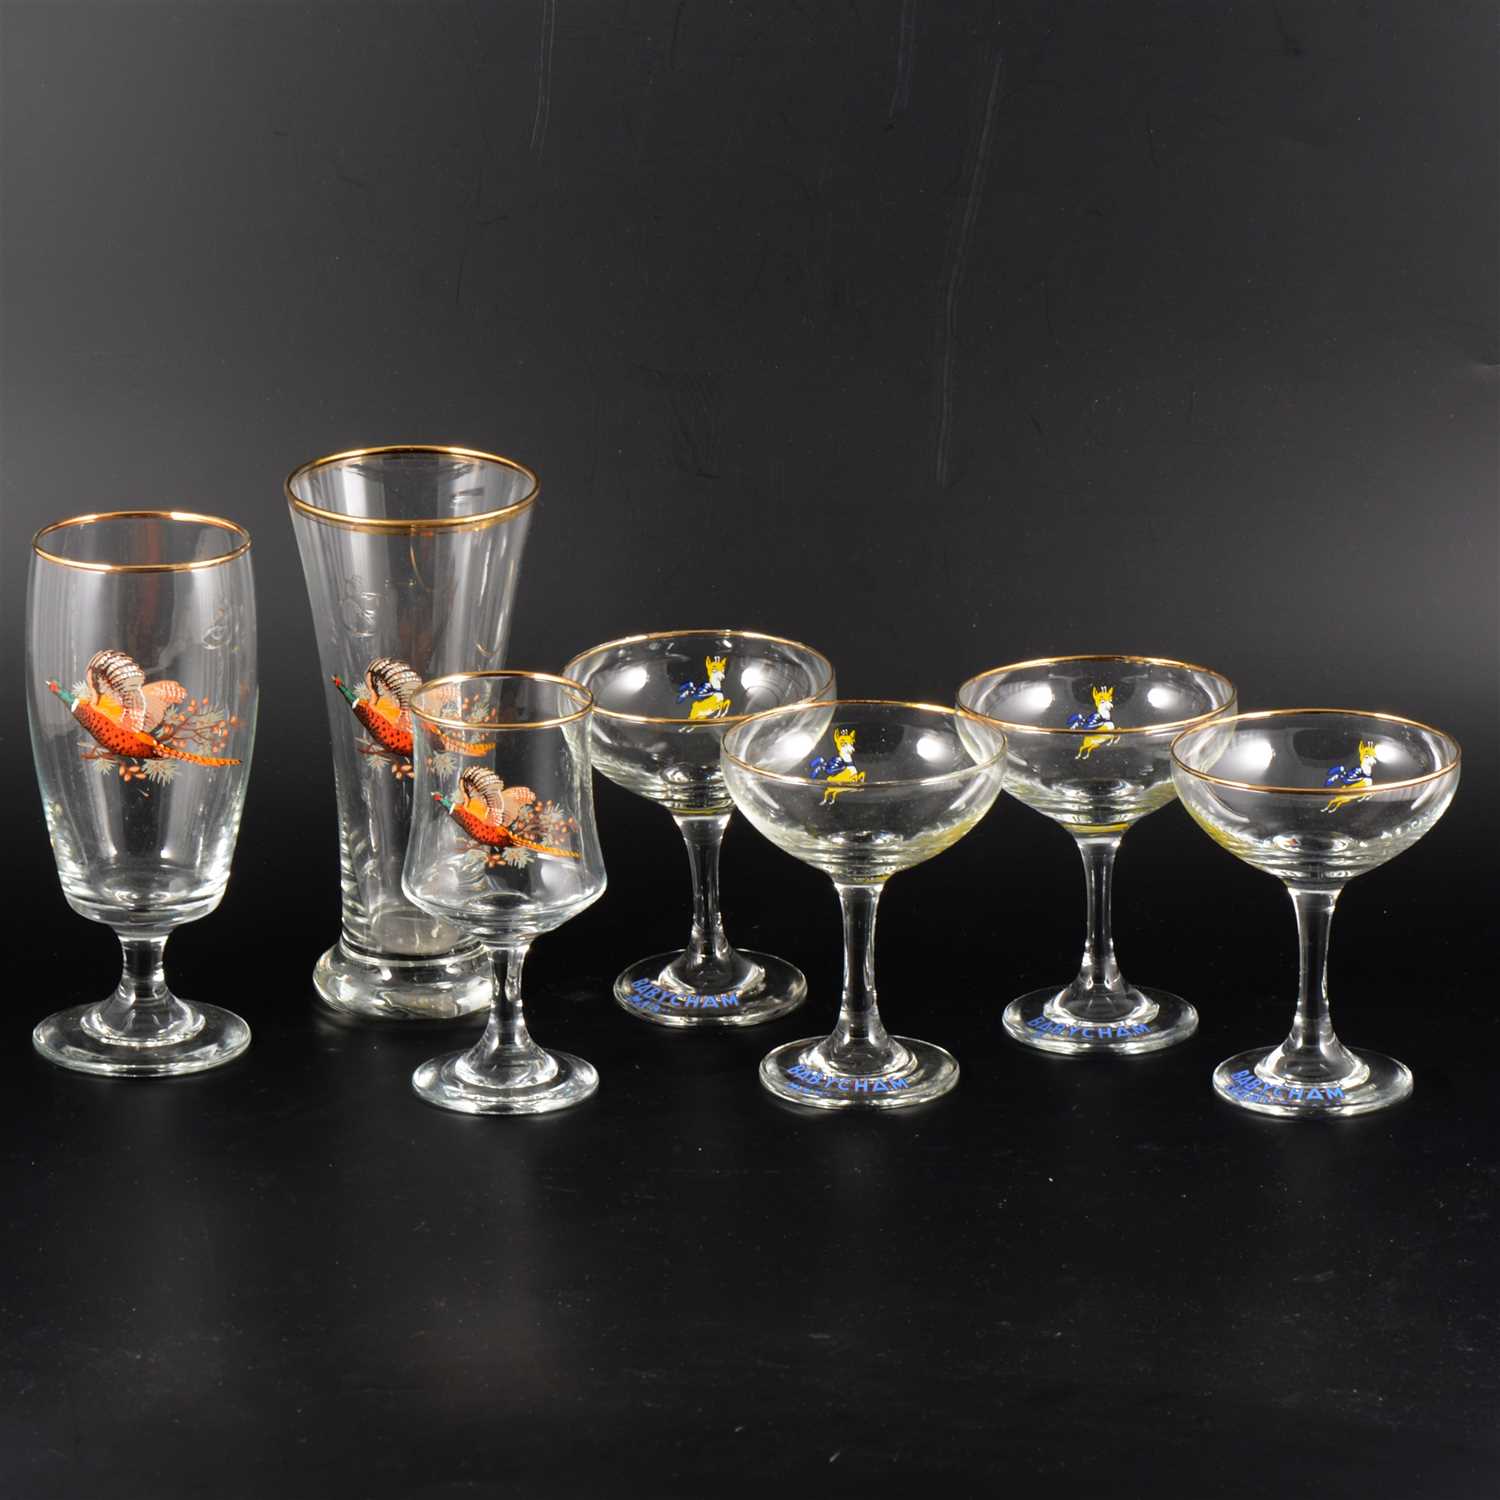 Lot 60 - Three trays of vintage retro glassware - Babycham glasses, Pink Lady, Snowball, soda syphon, pheasant ware etc